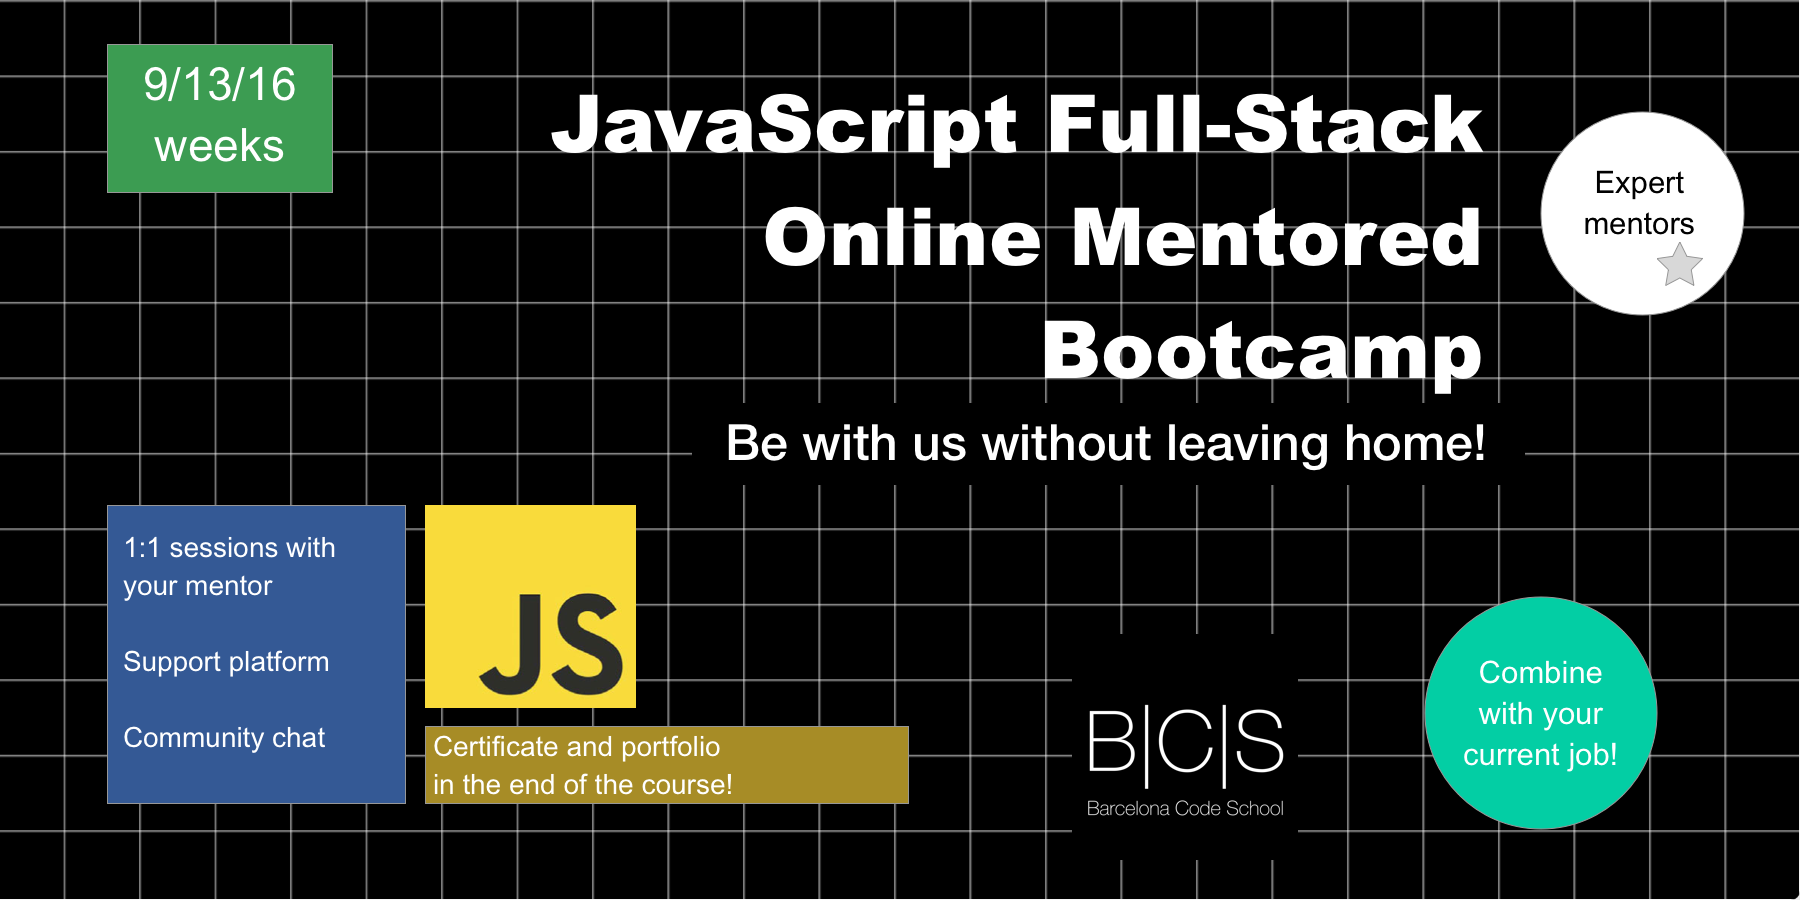 Online JavaScript Full-Stack Bootcamp in Barcelona Code School